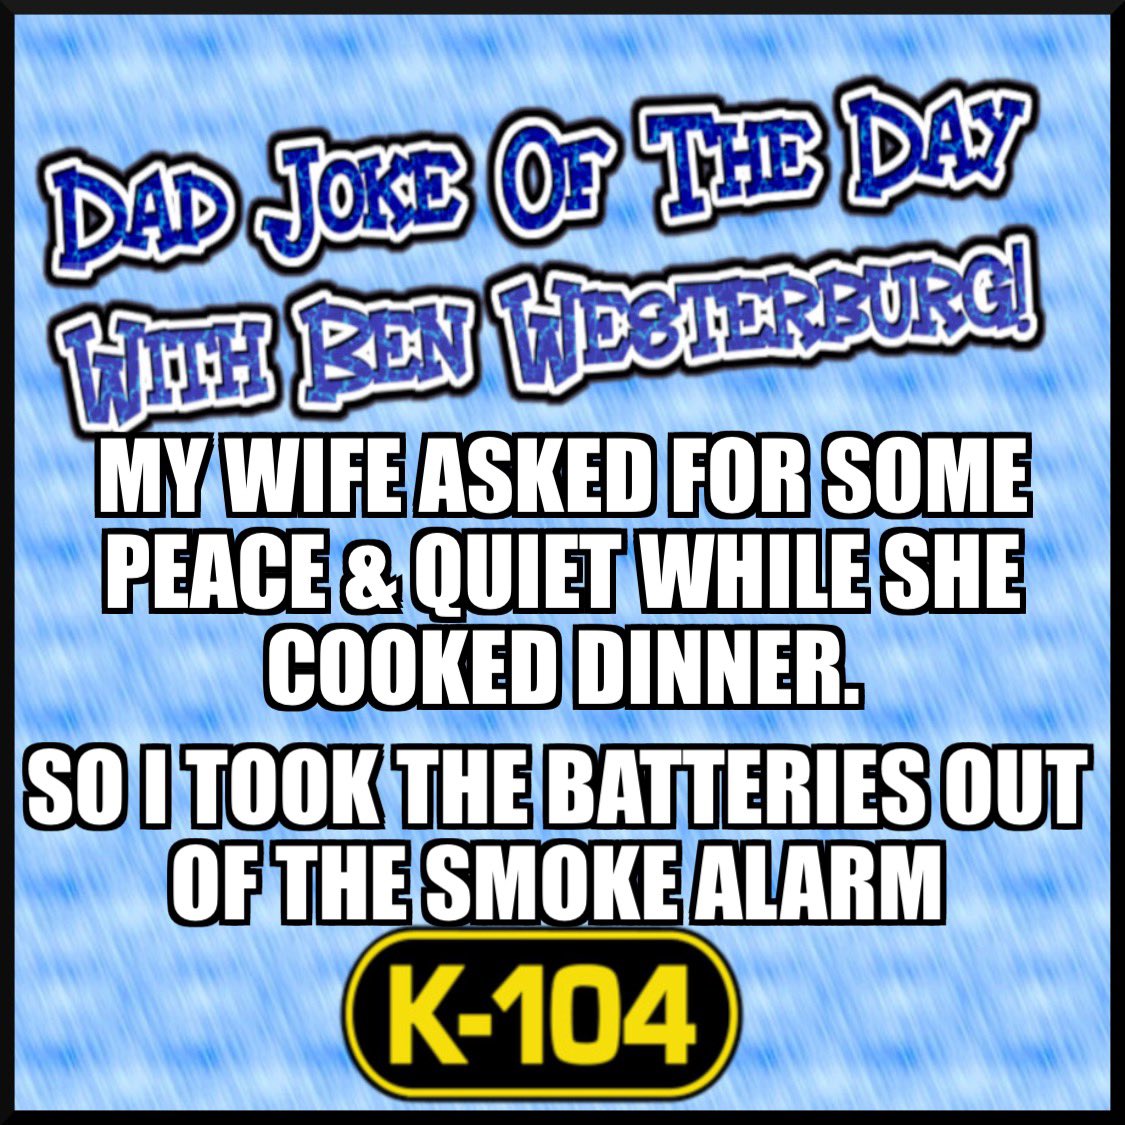 #dadjoke #dadjokes #dadjokeoftheday #wife #peaceandquiet #peace #quiet #cook #dinner #batteries #smoke #alarm #smokealarm